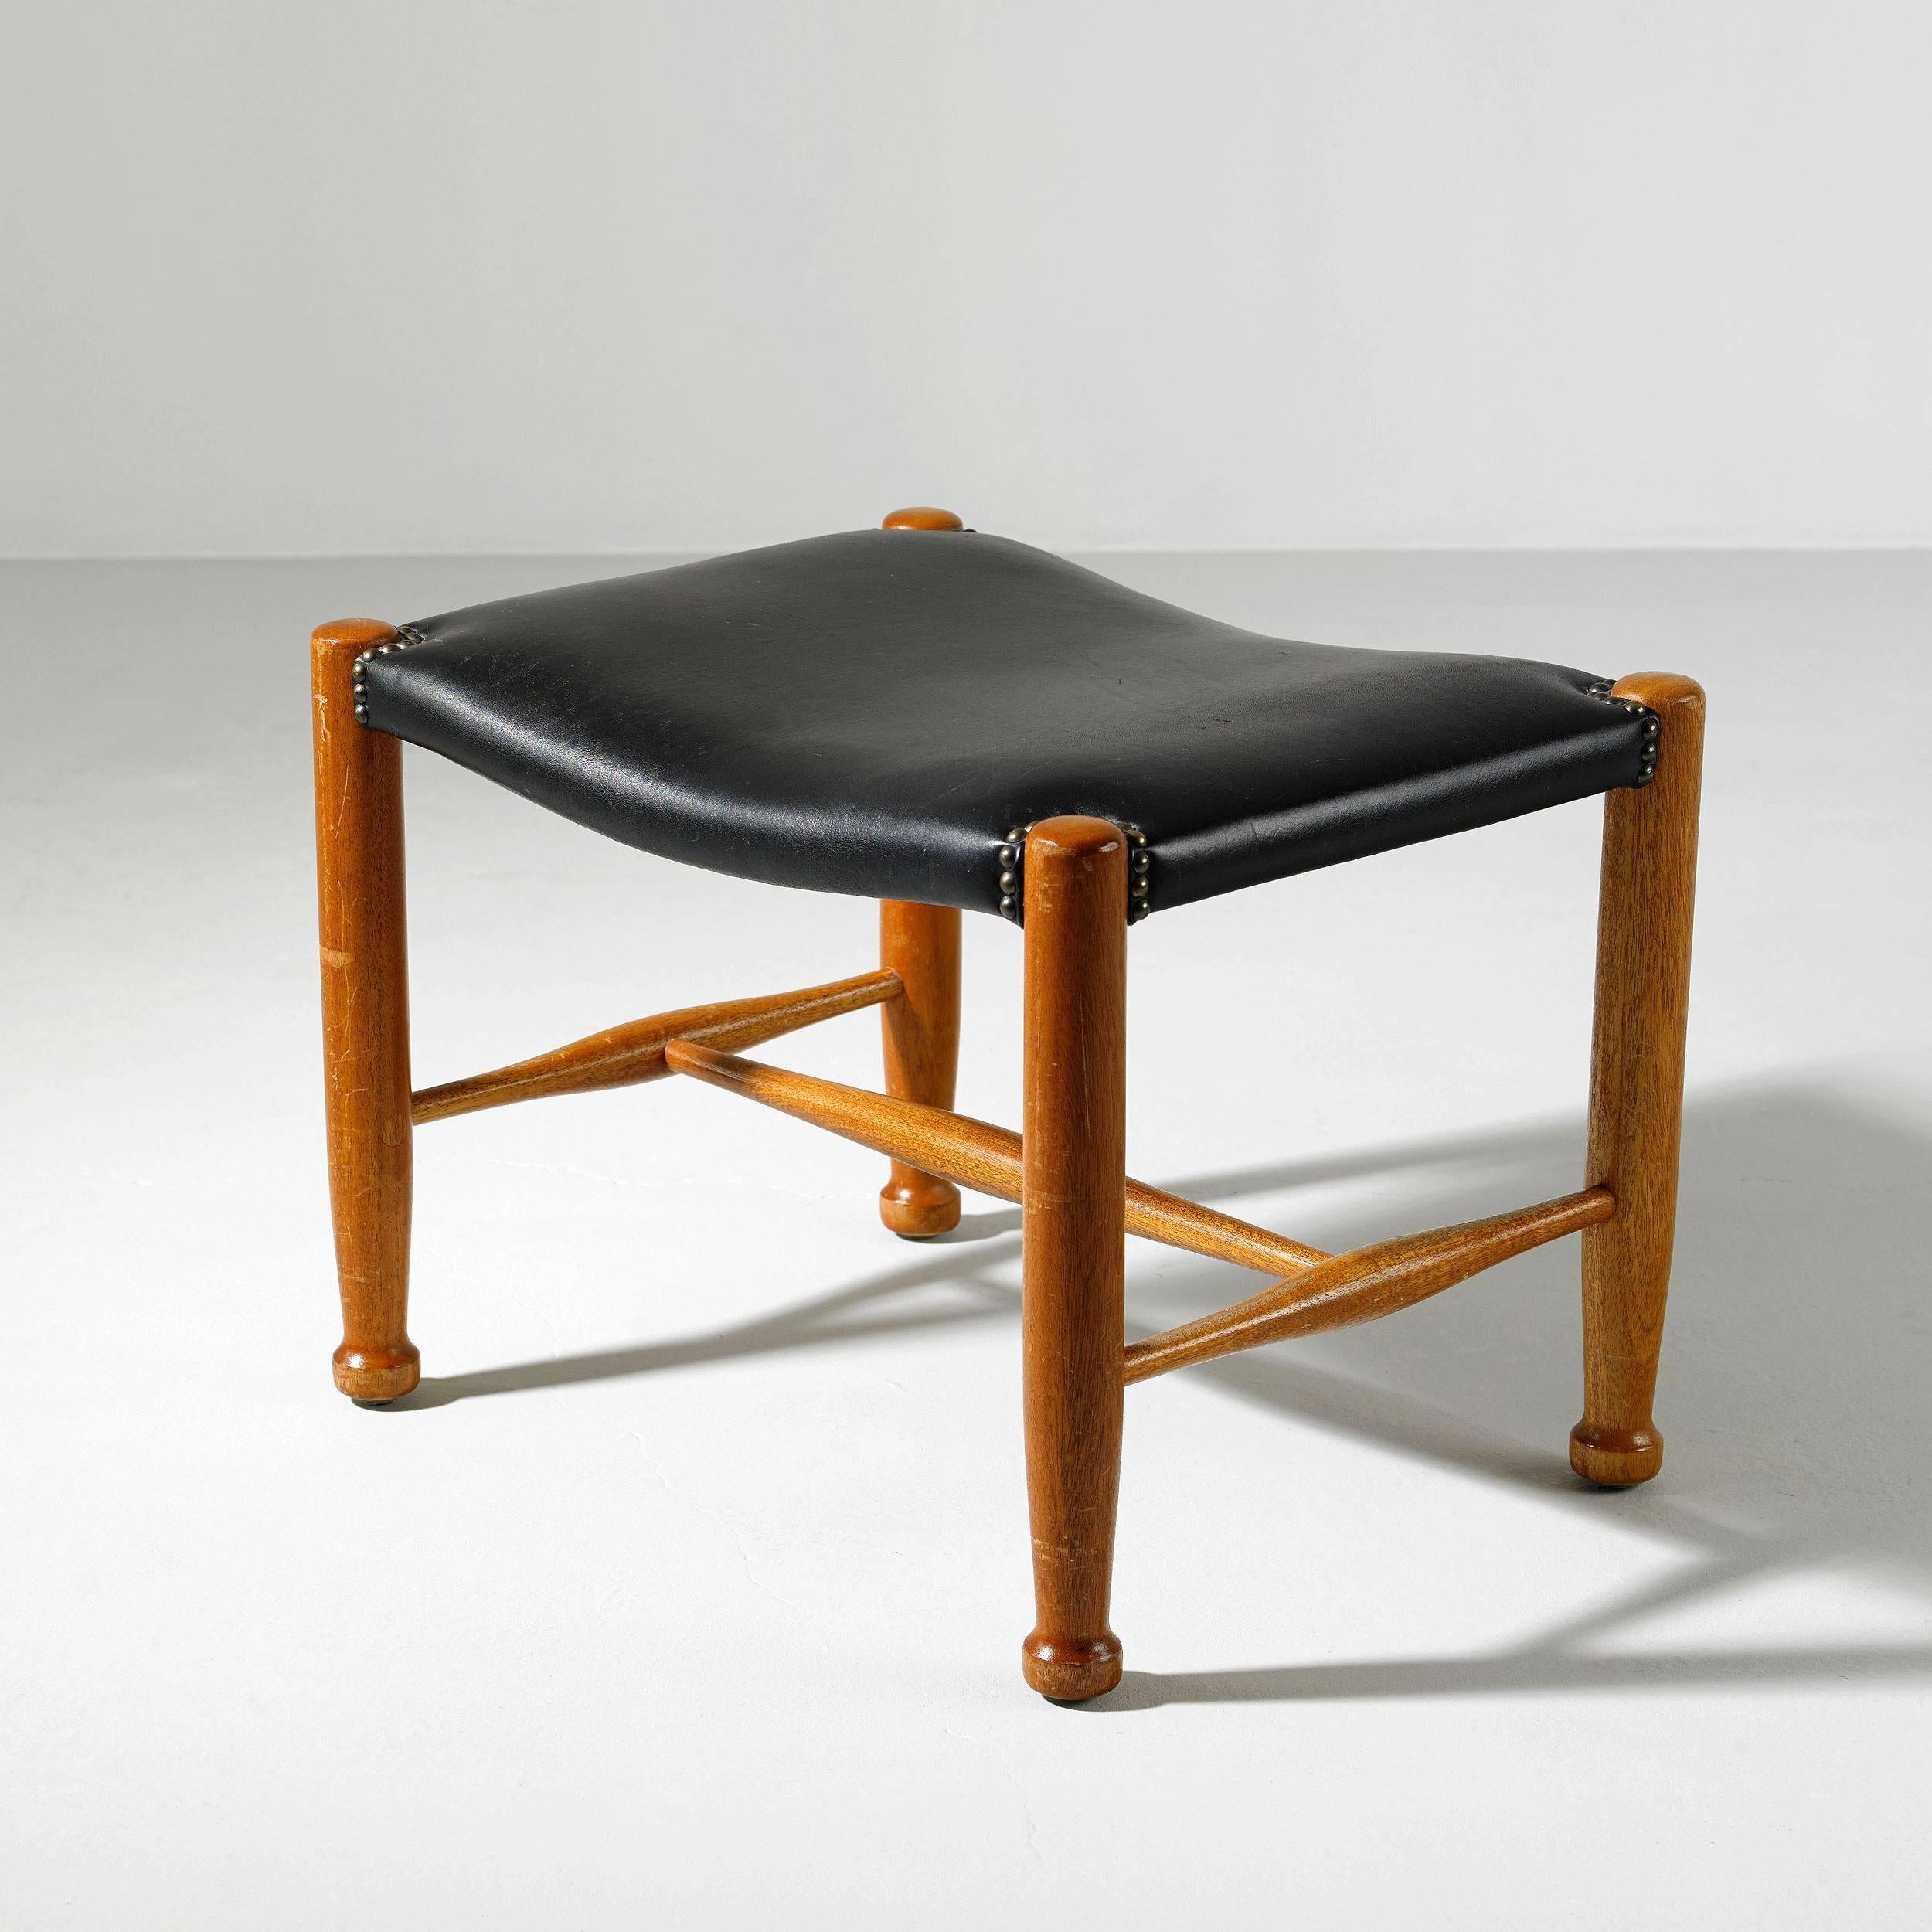 Josef Frank, a stool for Svenskt Tenn, modell number 686, designed in 1936, mahogany and black leather.